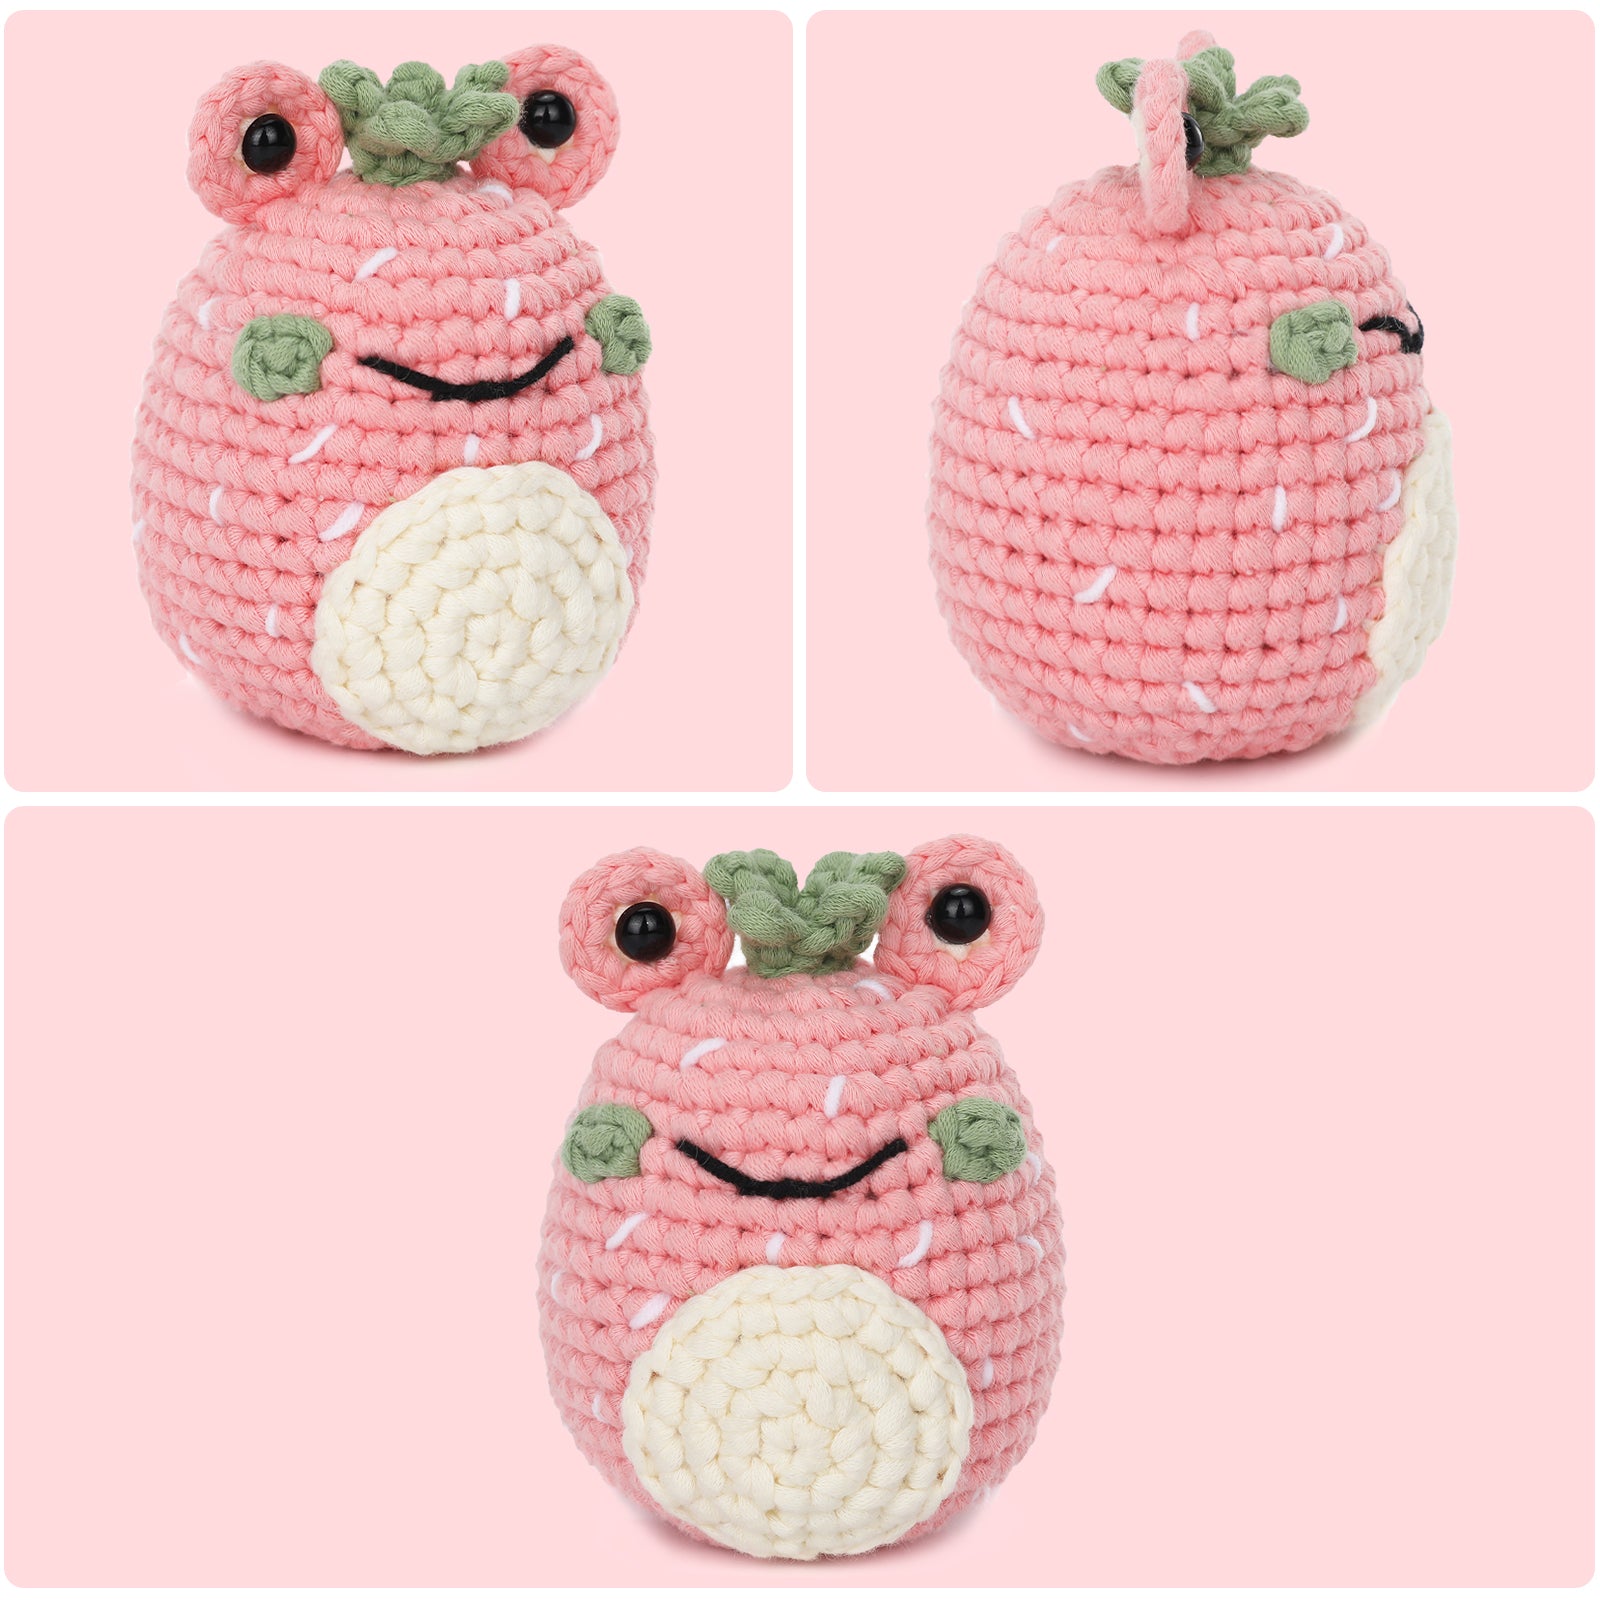 Complete Crochet Kit for Beginners —— Hello Flossie